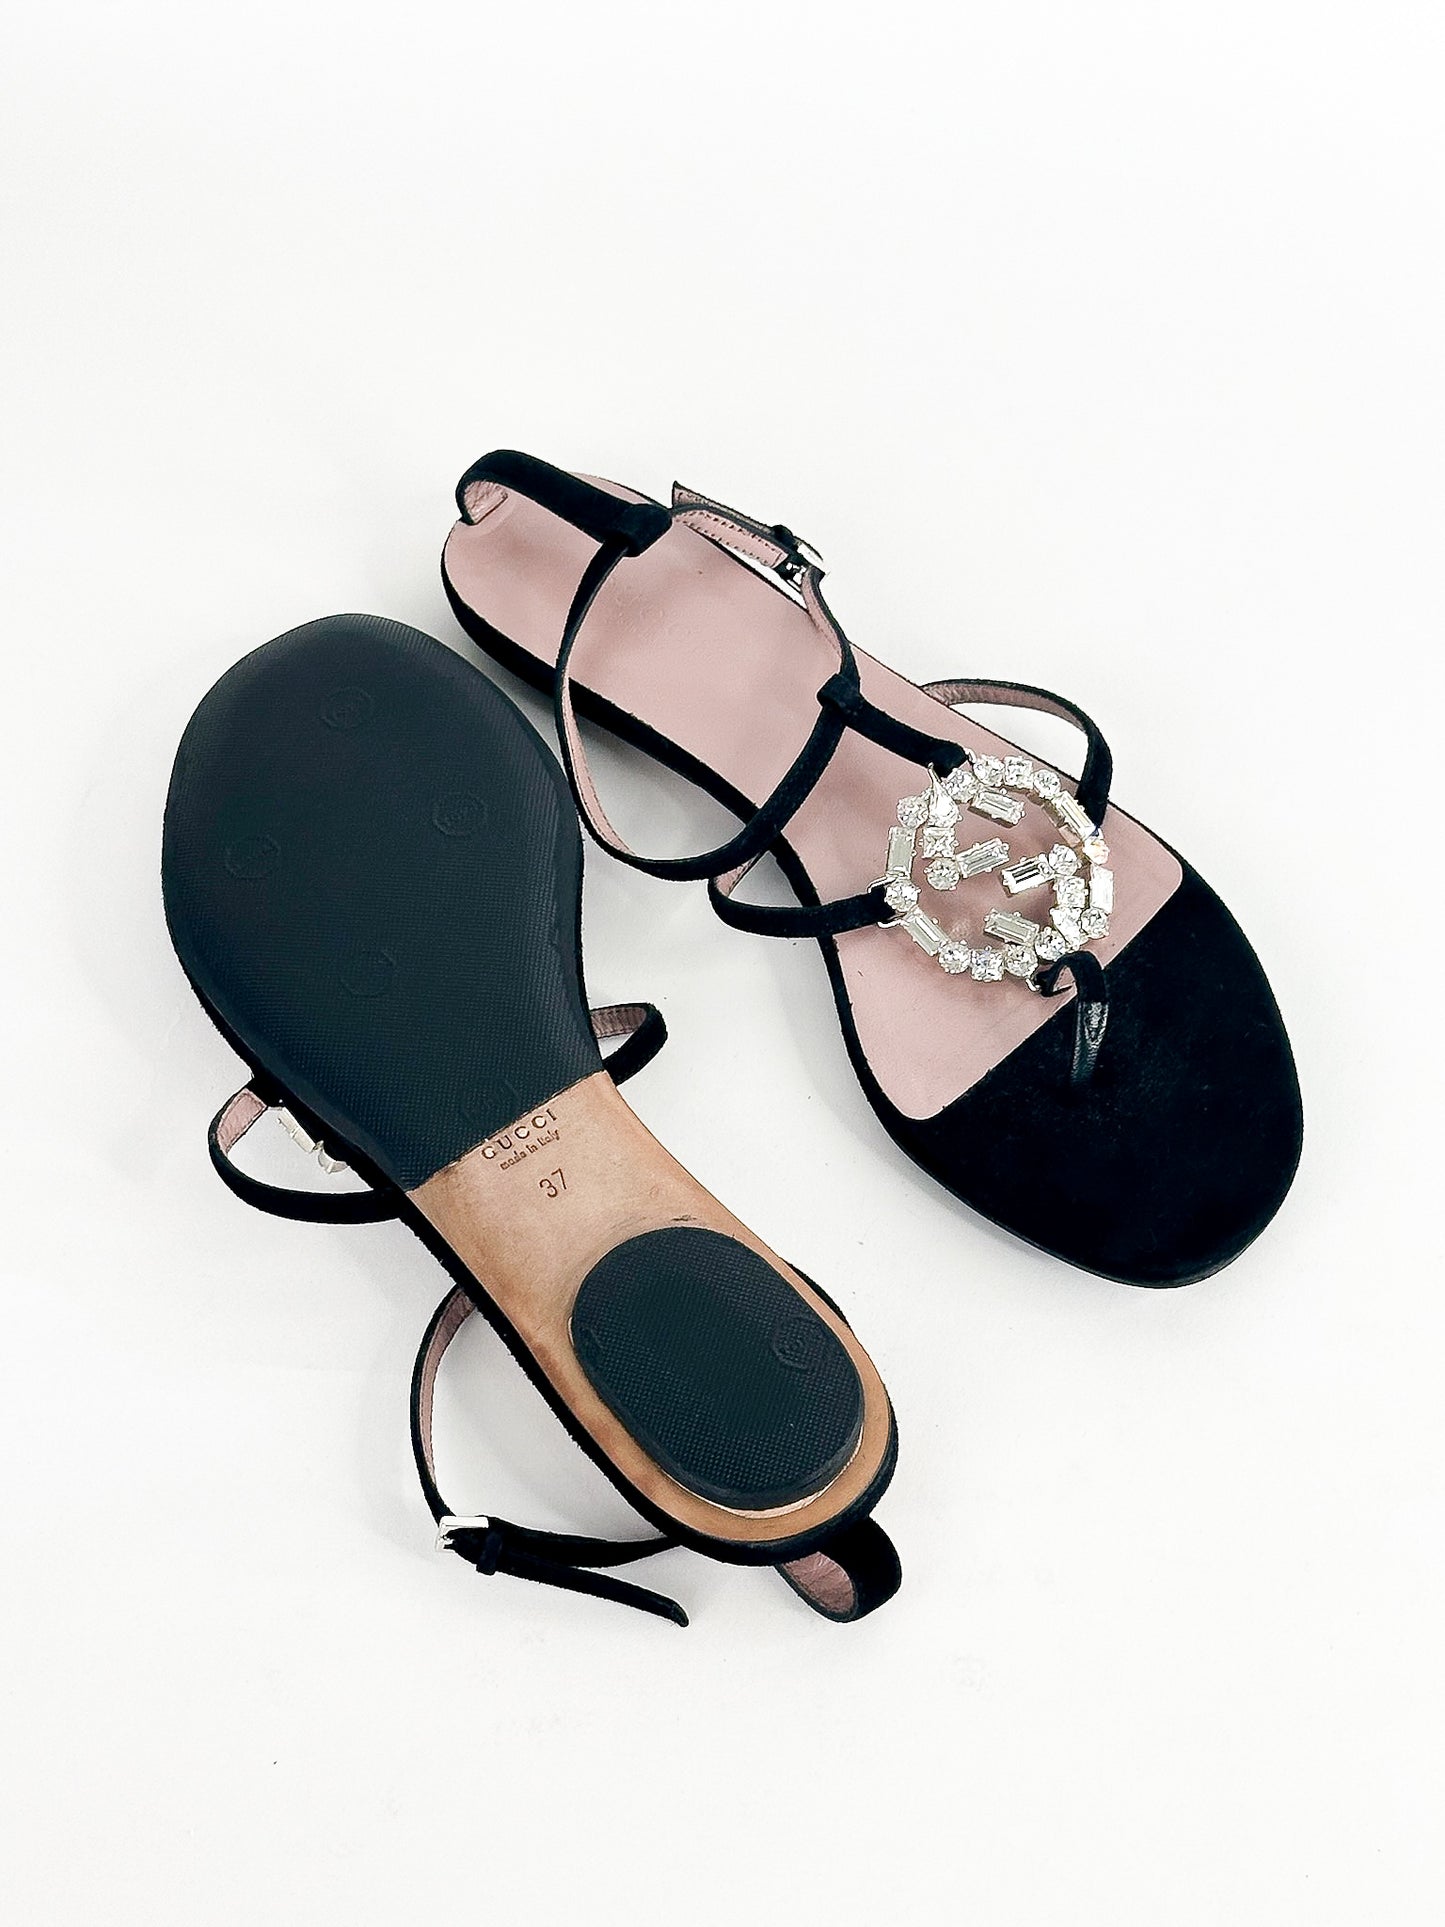 Gucci Black Suede GG Interlocking Crystal Embellished Flat Sandals Size 37